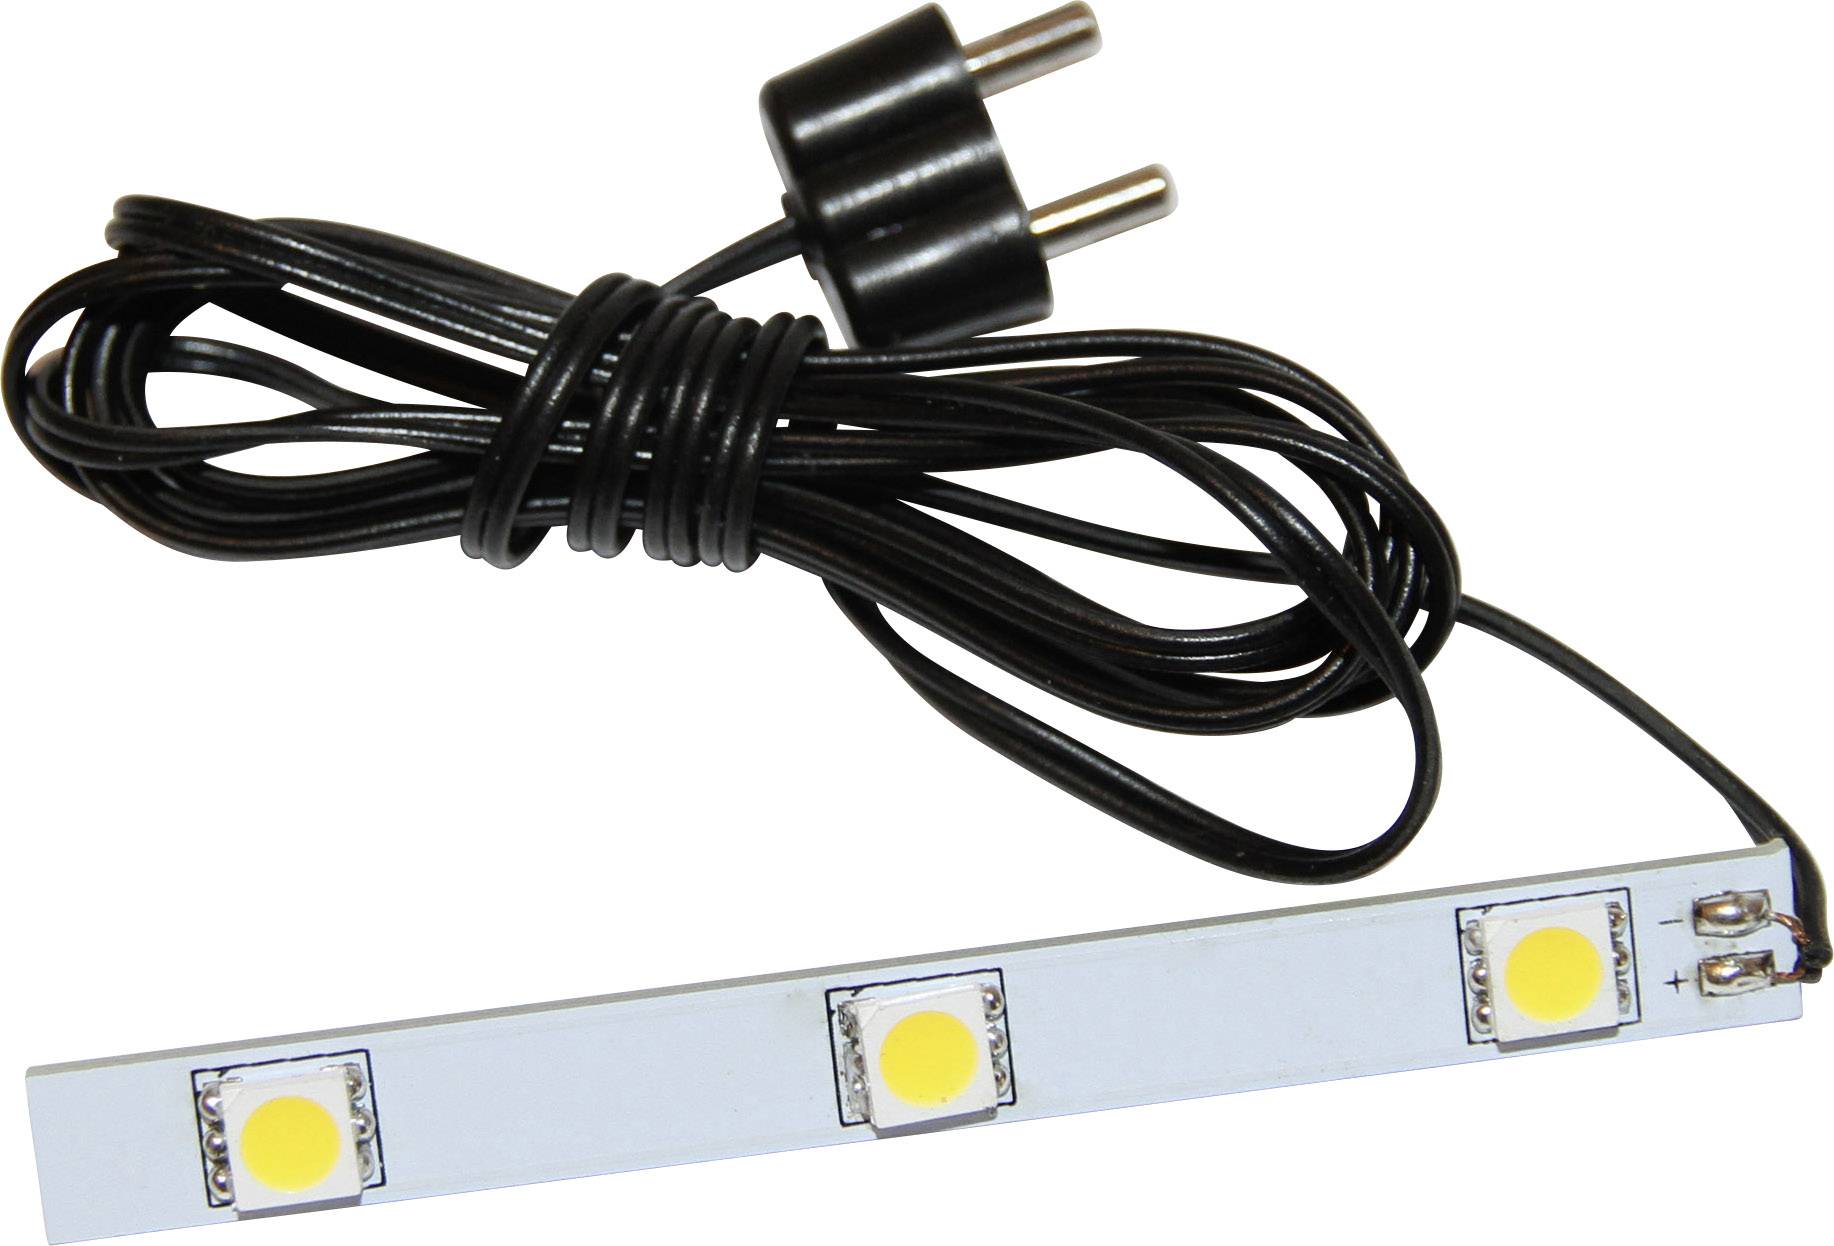 Kahlert 69911 Licht LED-Leiste mit Batterie-Box 3.5 V  weiß  *NEU/OVP* 